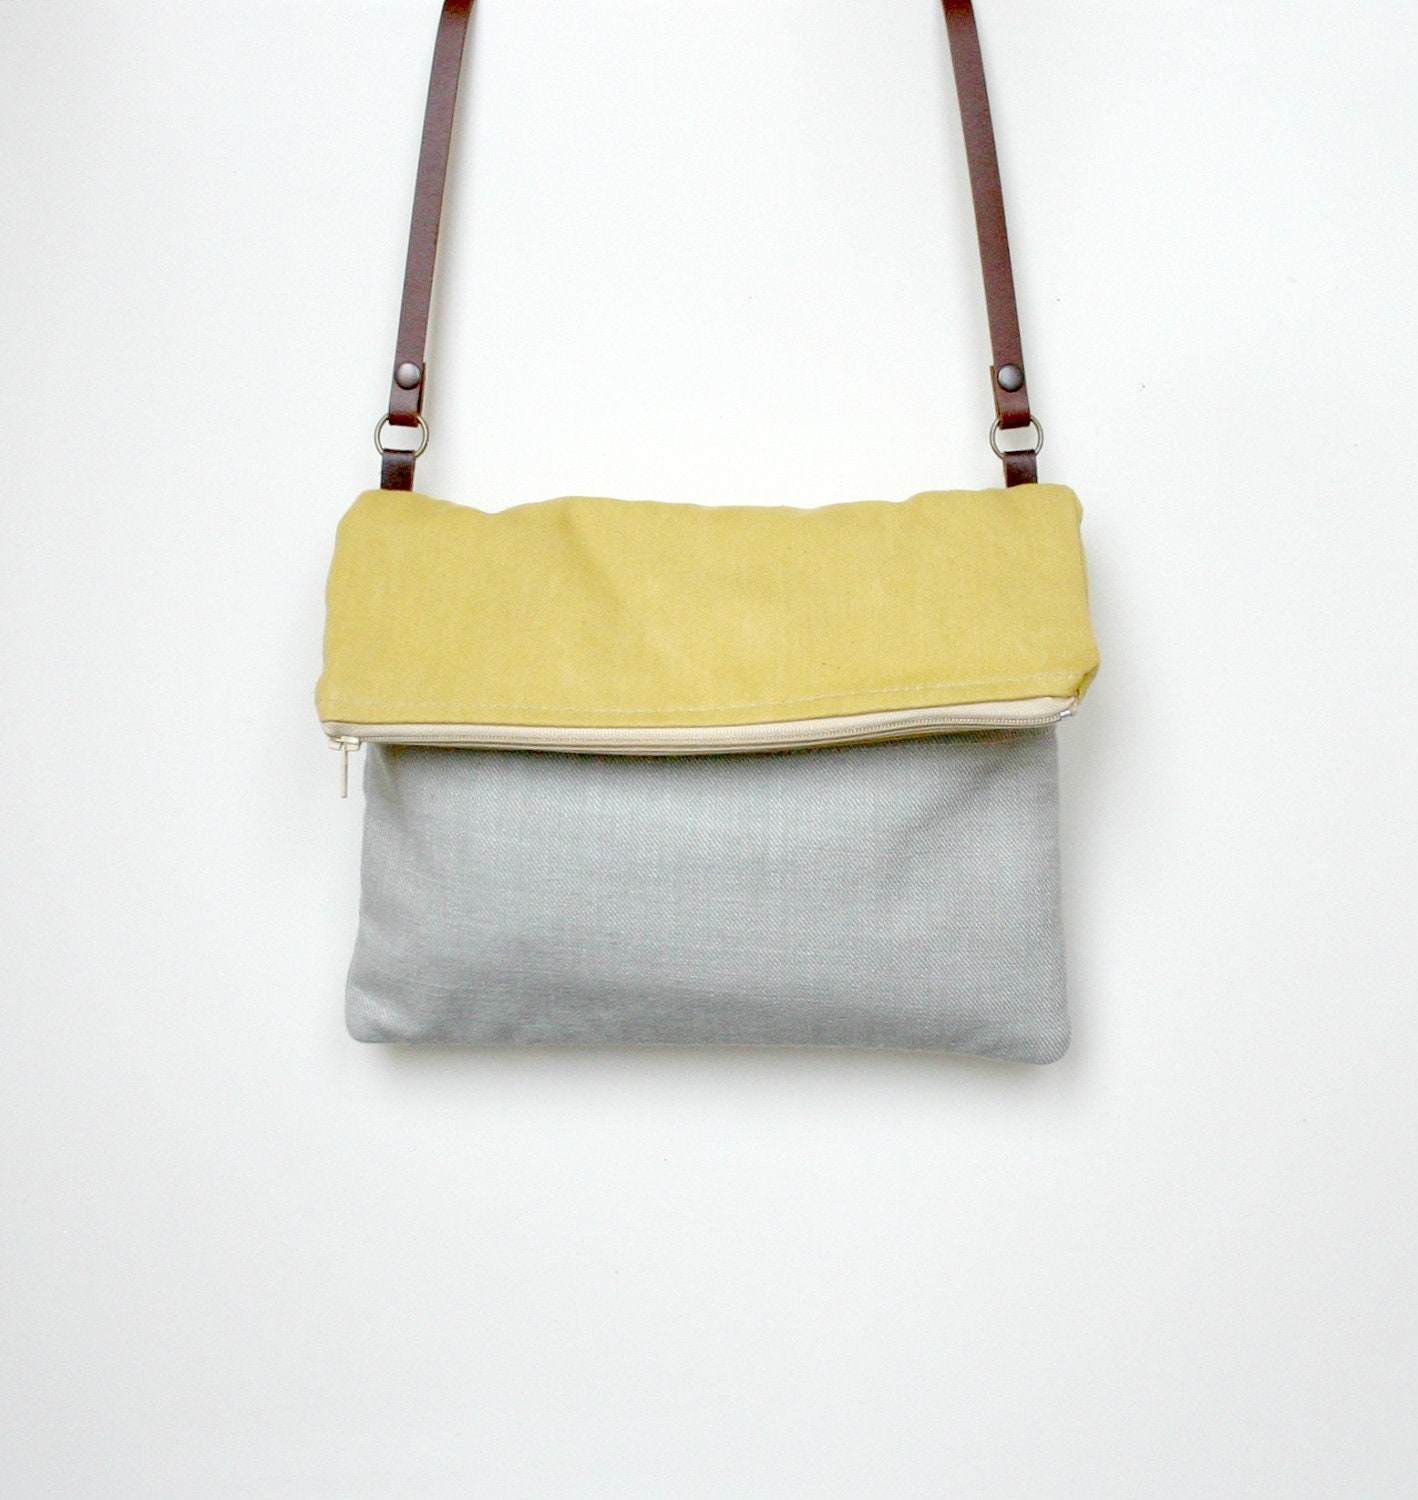 Foldover bag Colorblock Purse Yellow Grey washed canvas handbag sunshine leather strap - HelloVioleta